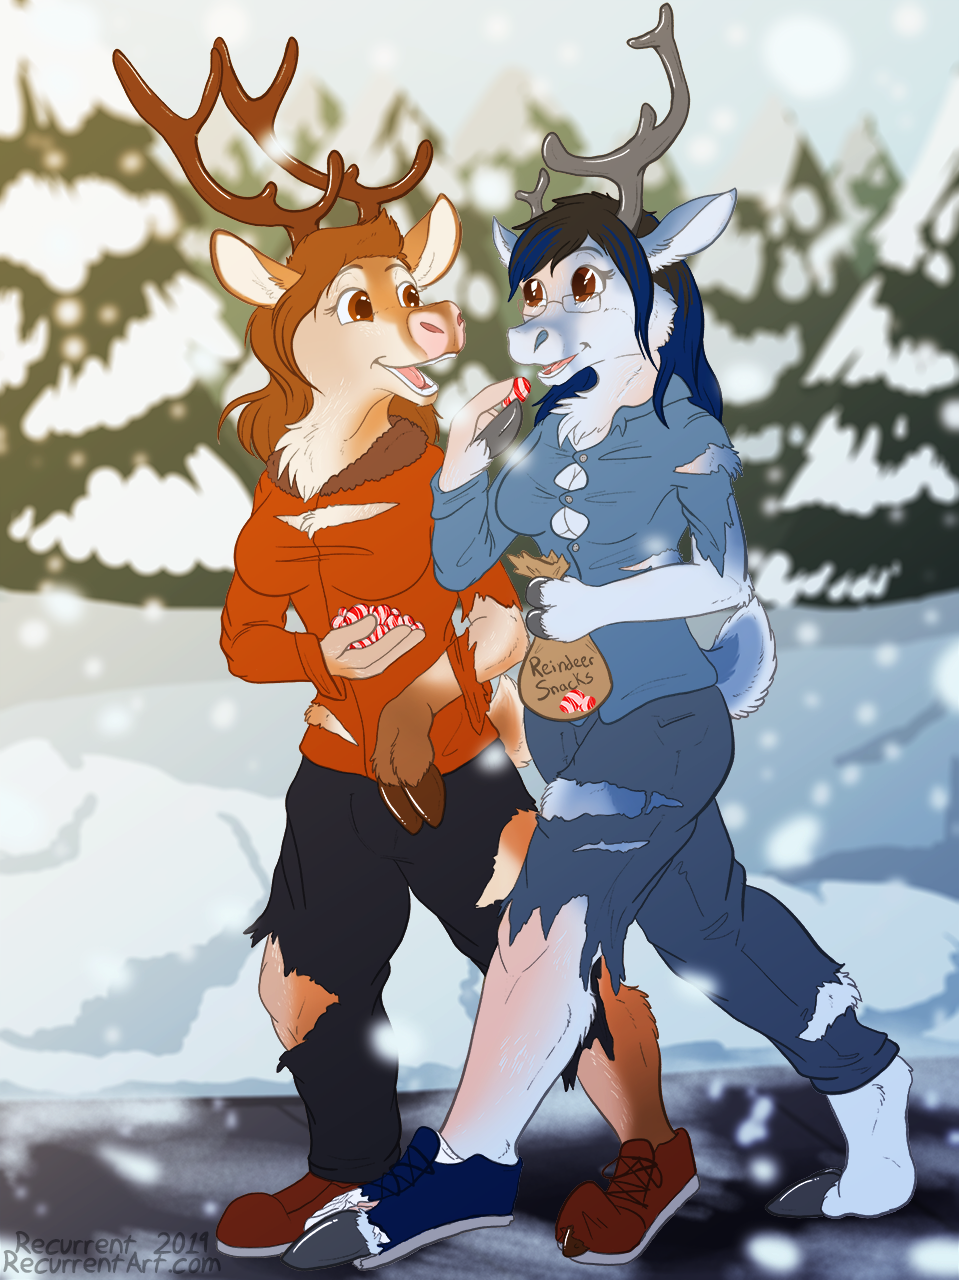 [c] Reindeer Snacks